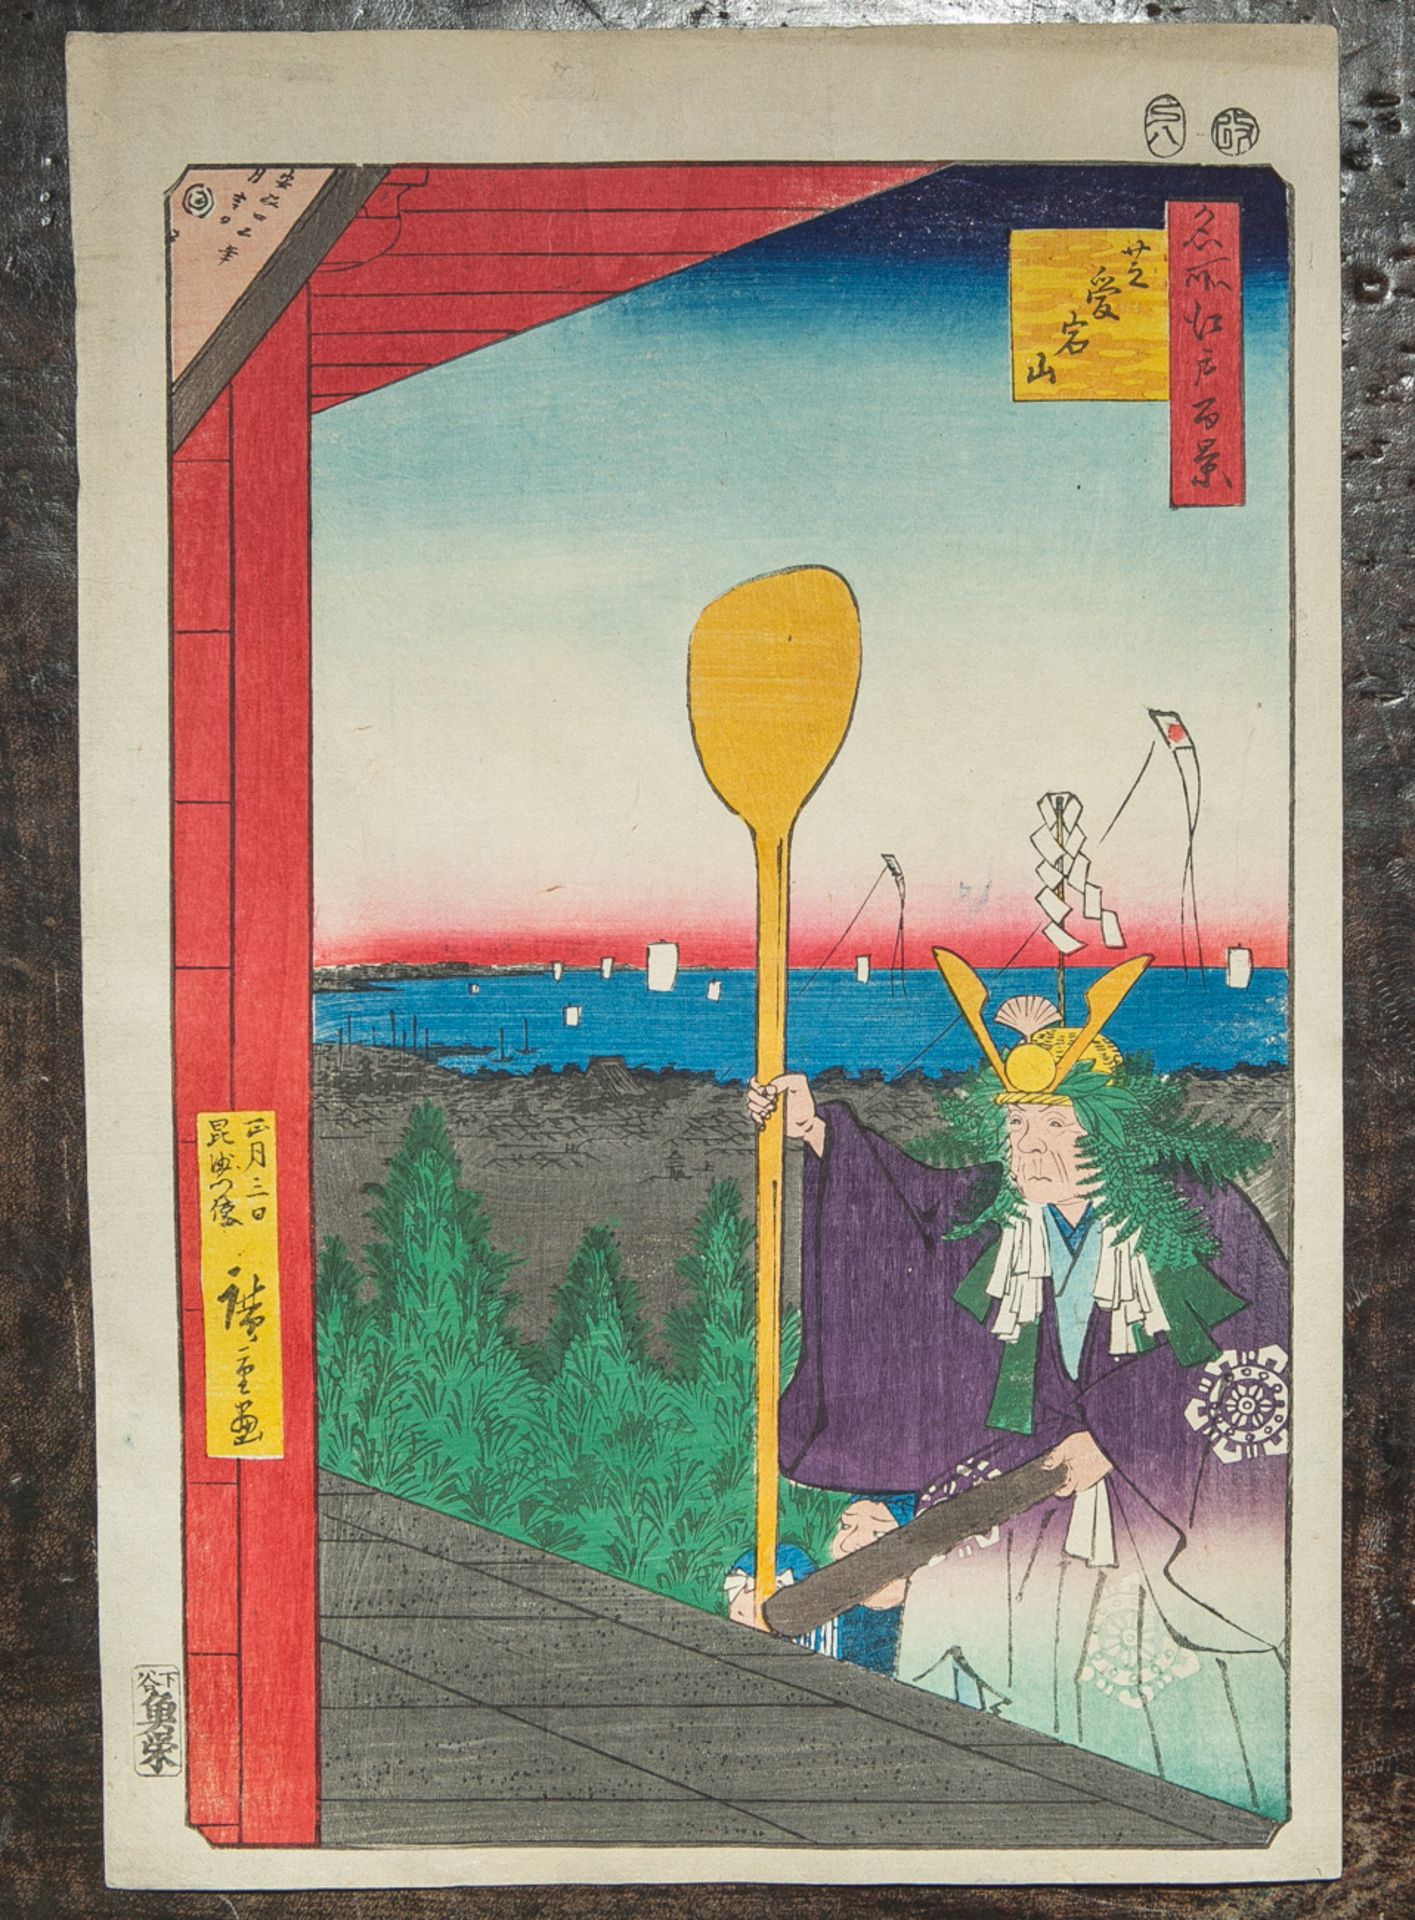 Hiroshige, Utagawa (1797-1858), Farbholzschnitt (Japan), Mount Atago, Shiba (Shiba